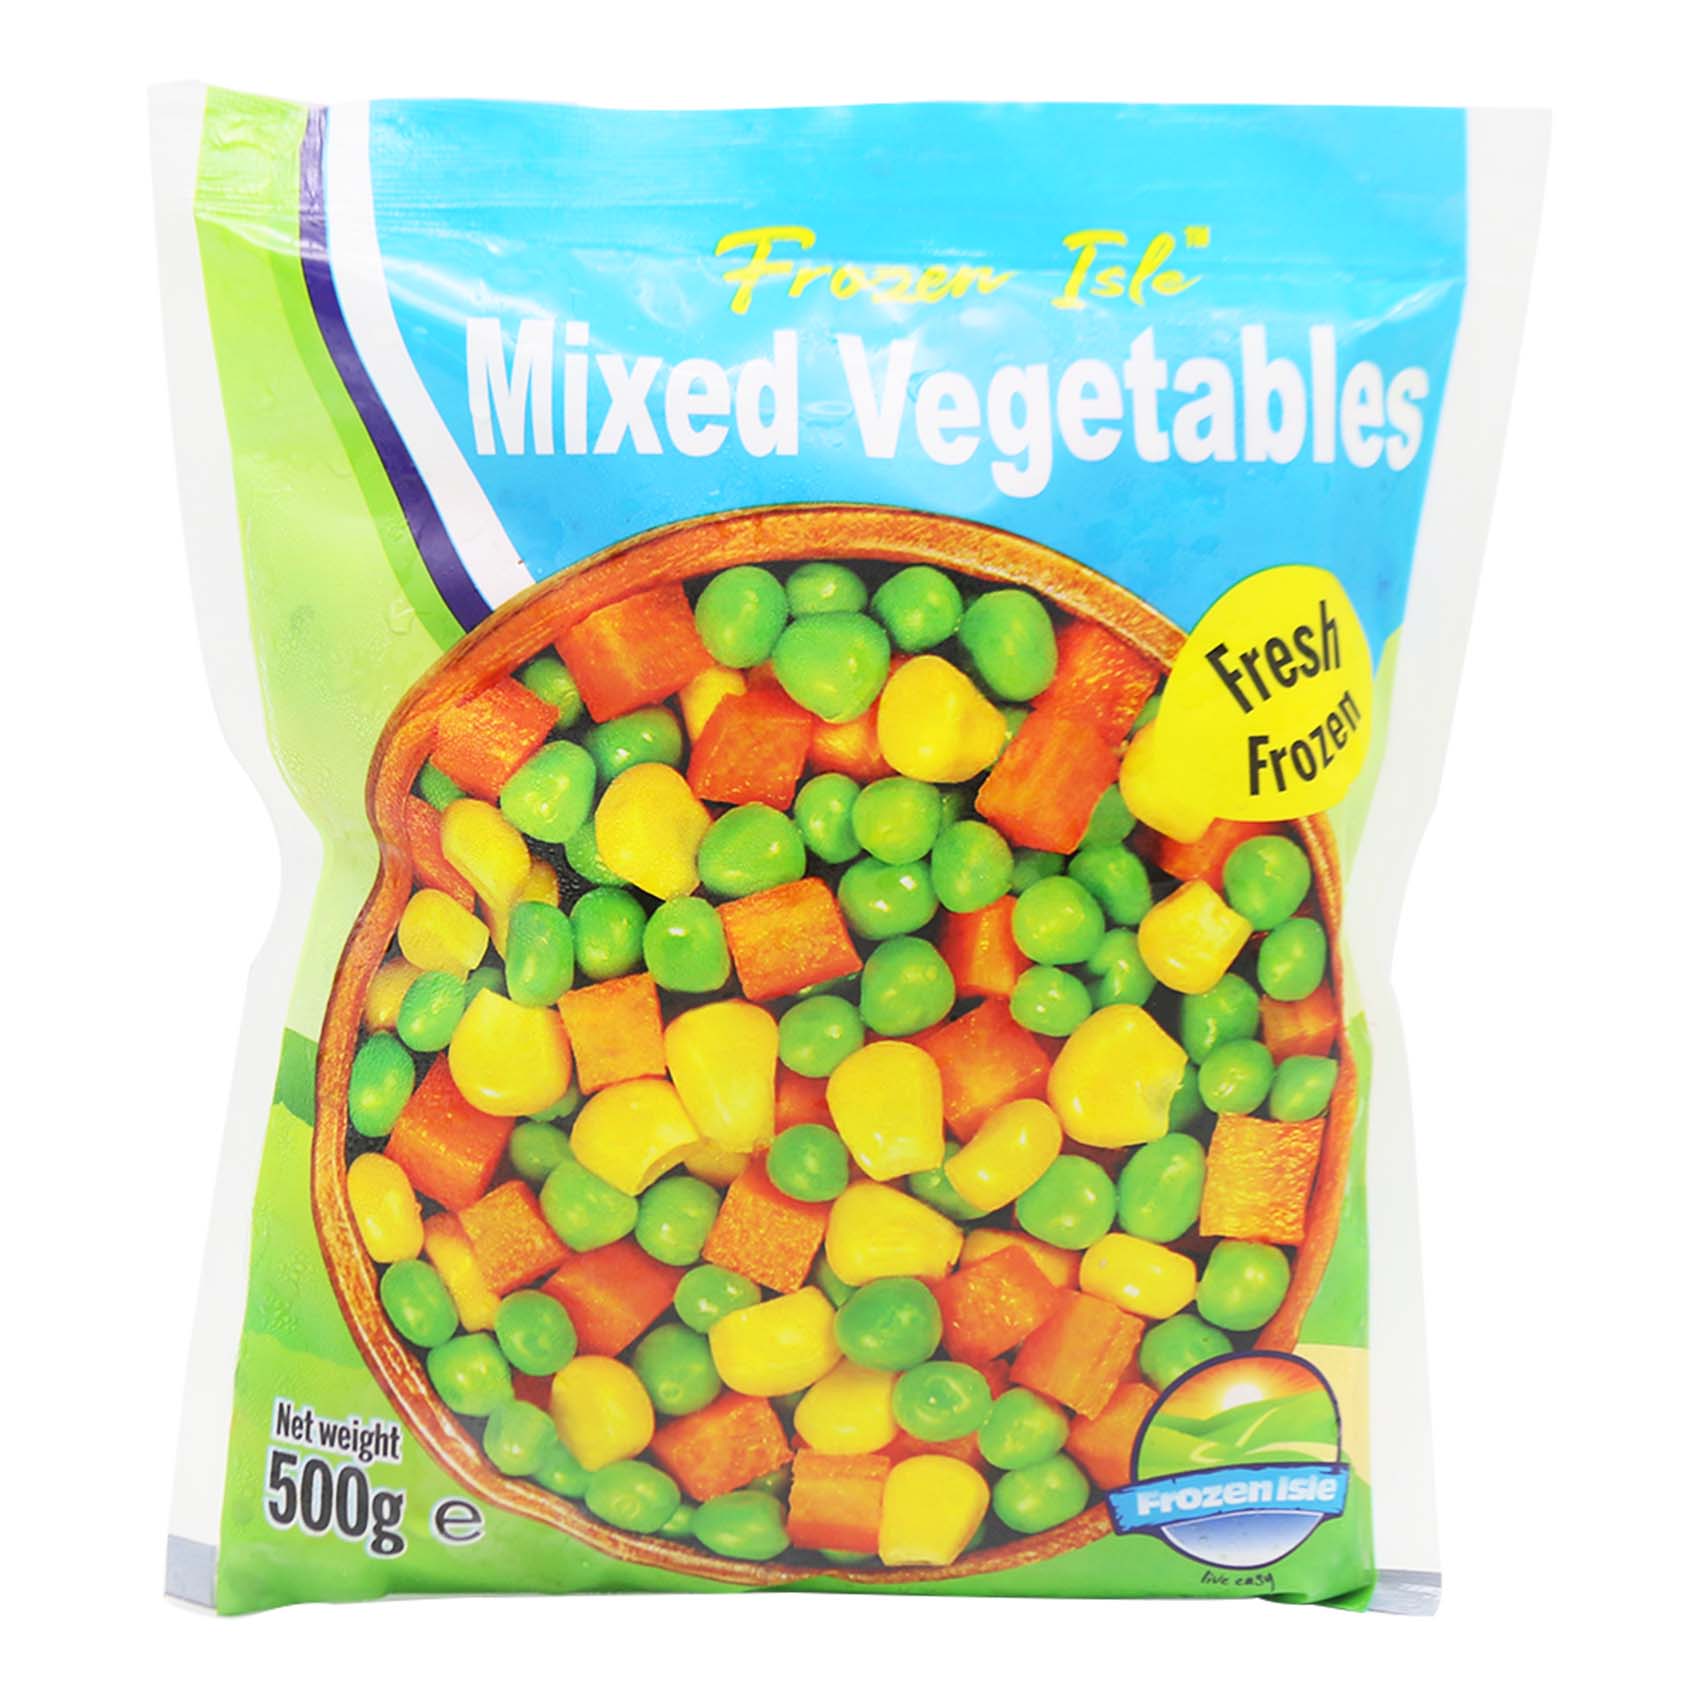 Frozen isle Frozen Mixed Vegetables 500g